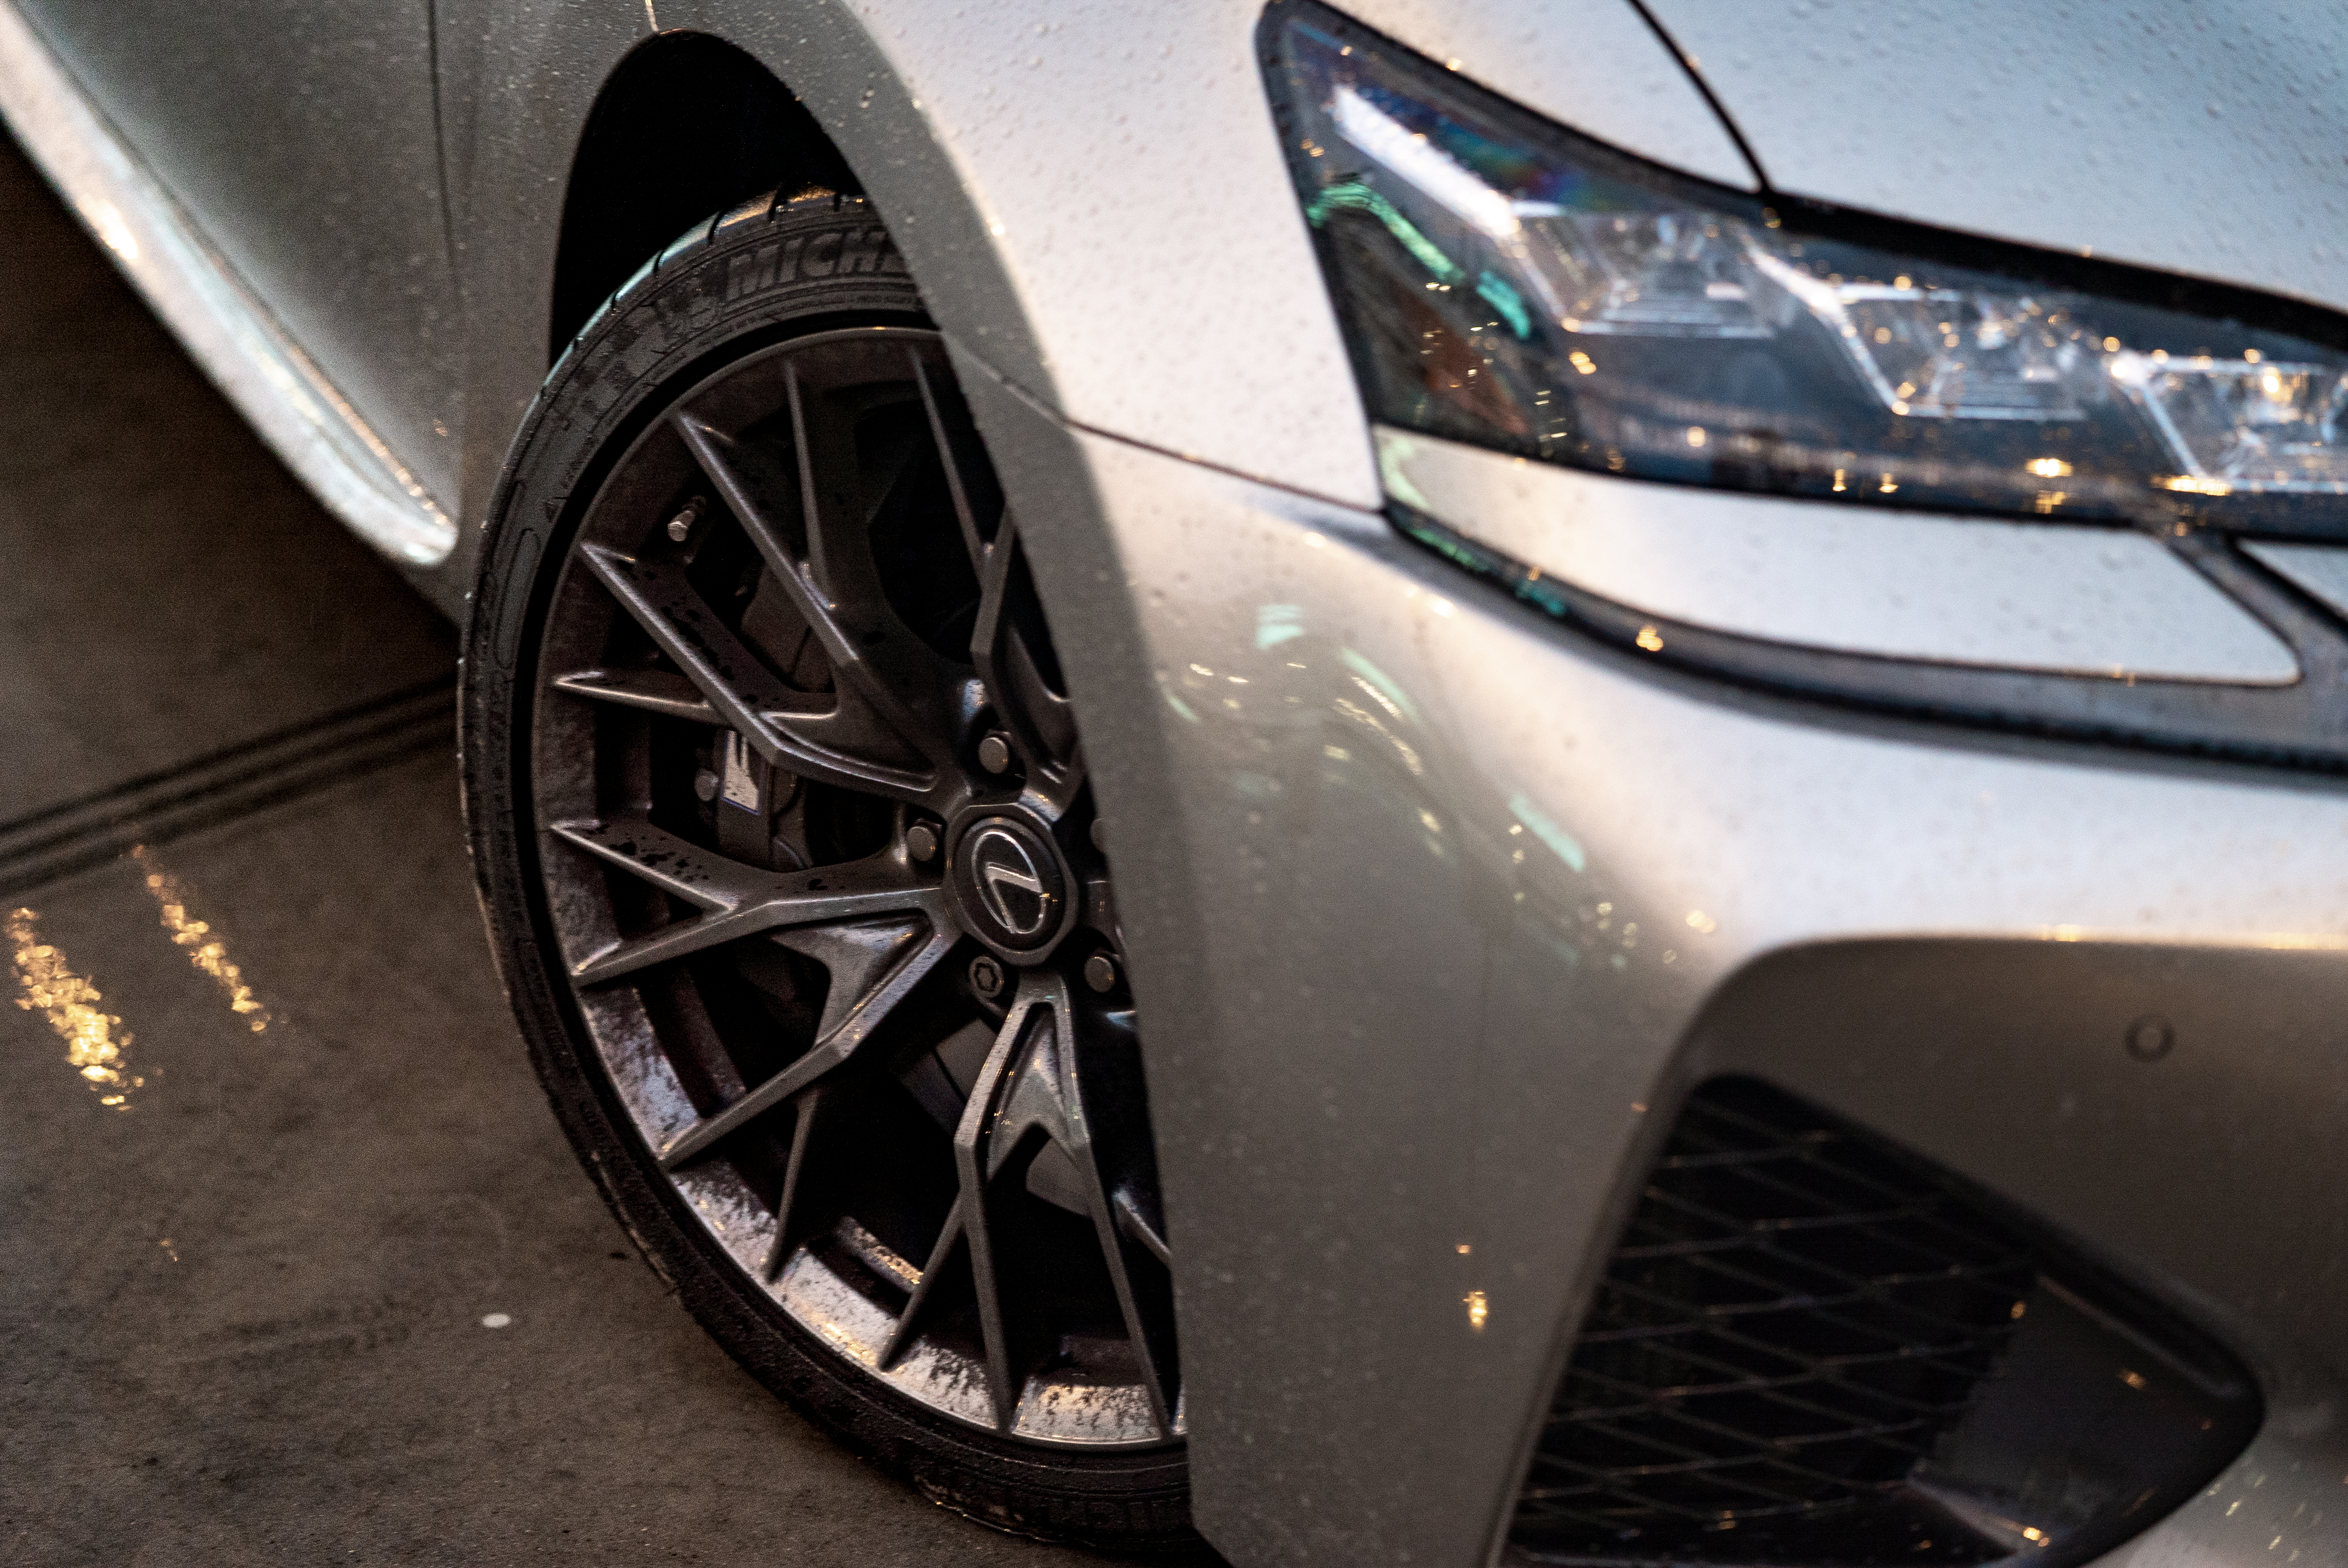 Lexus GS F brings new life into the sports sedan market | Rebecca Nguyen photos